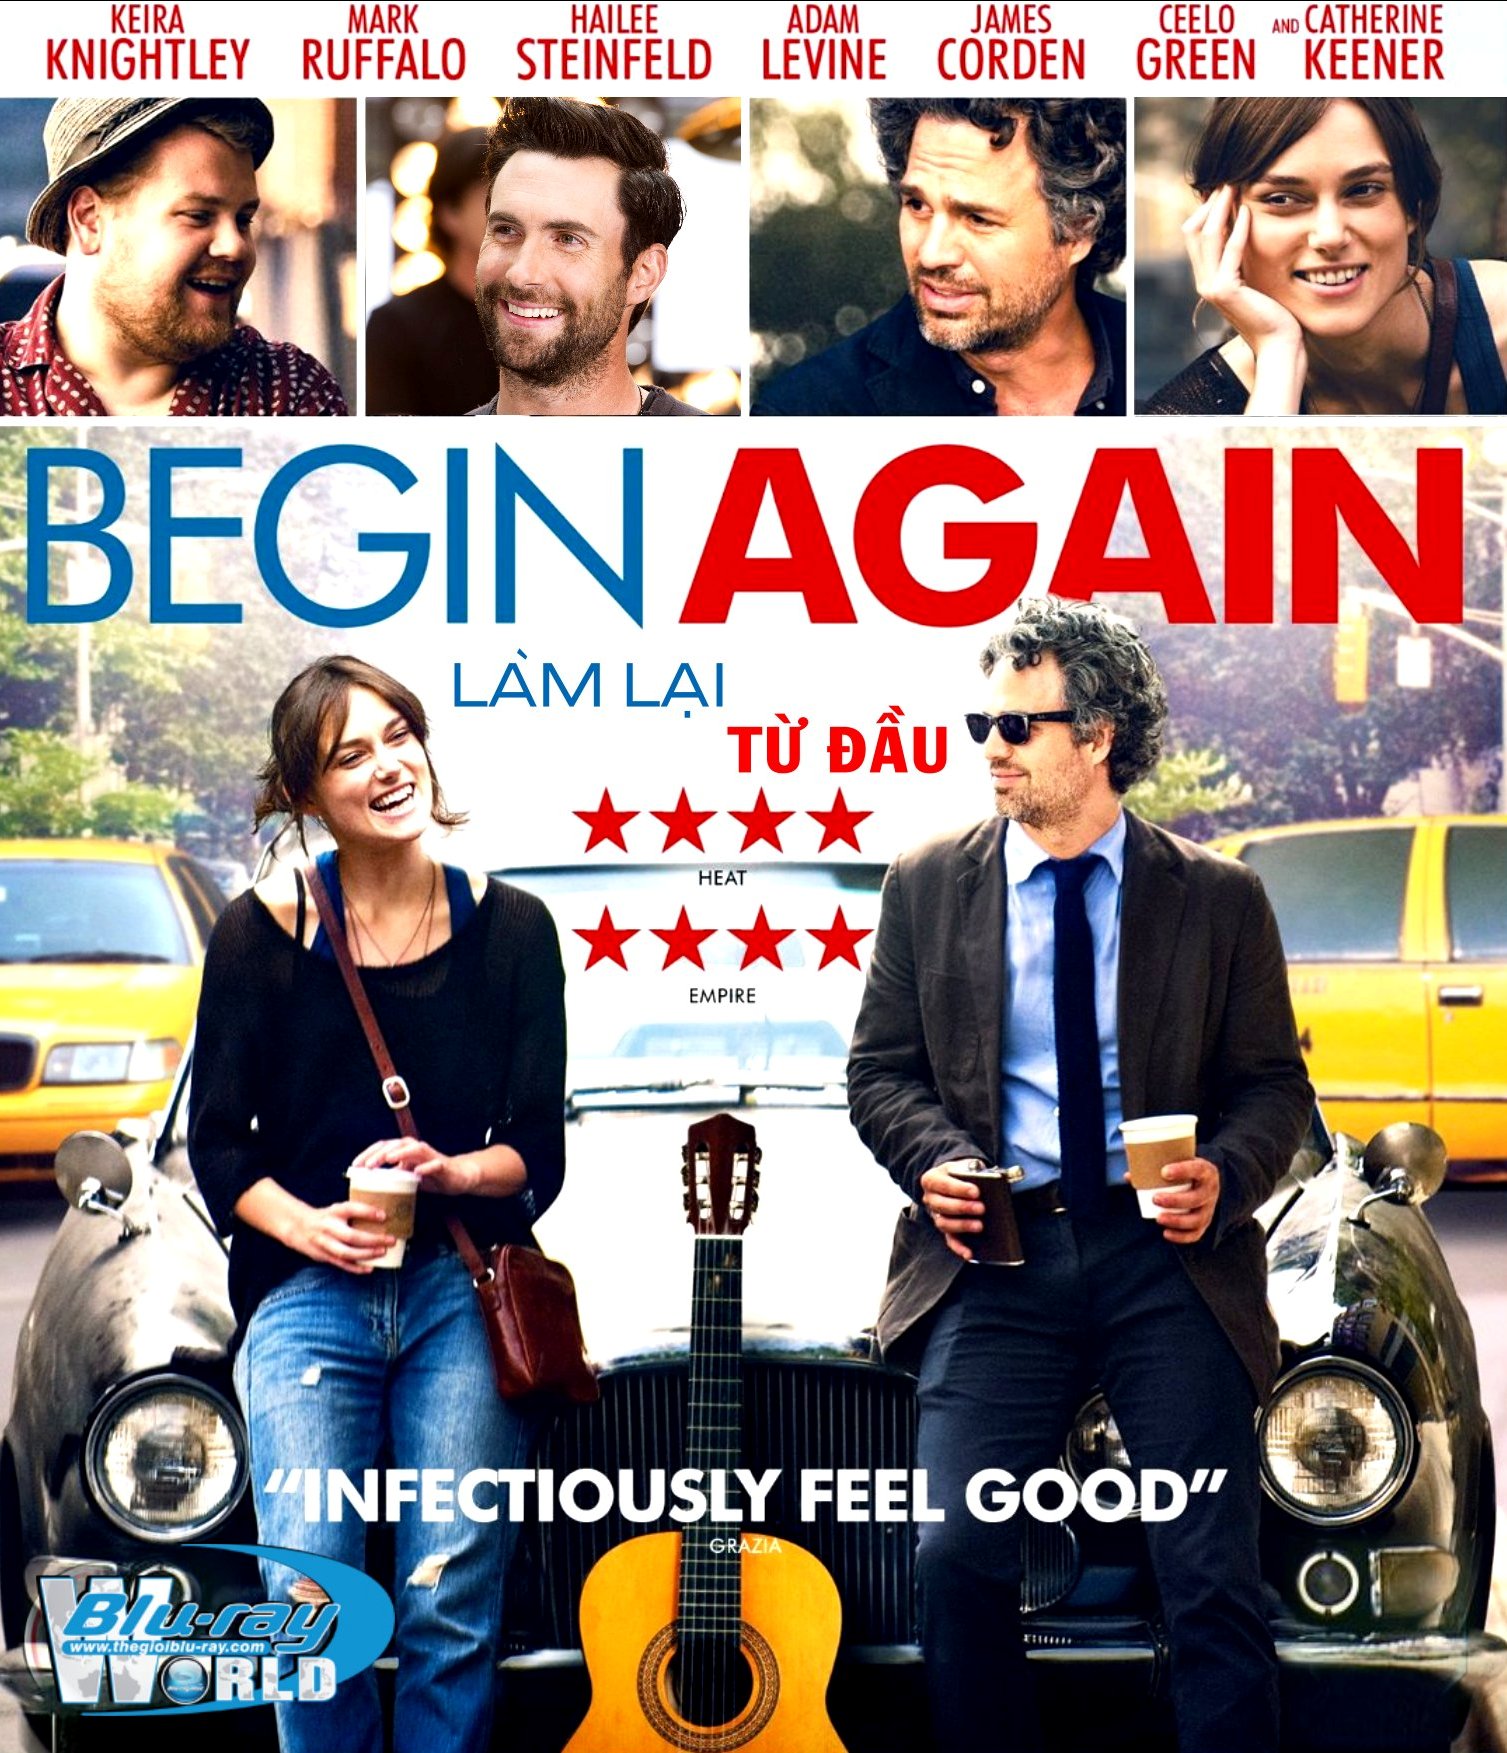 F2101. Begin Again - LÀM LẠI TỪ ĐẦU 2D50G (DTS-HD MA 5.1)